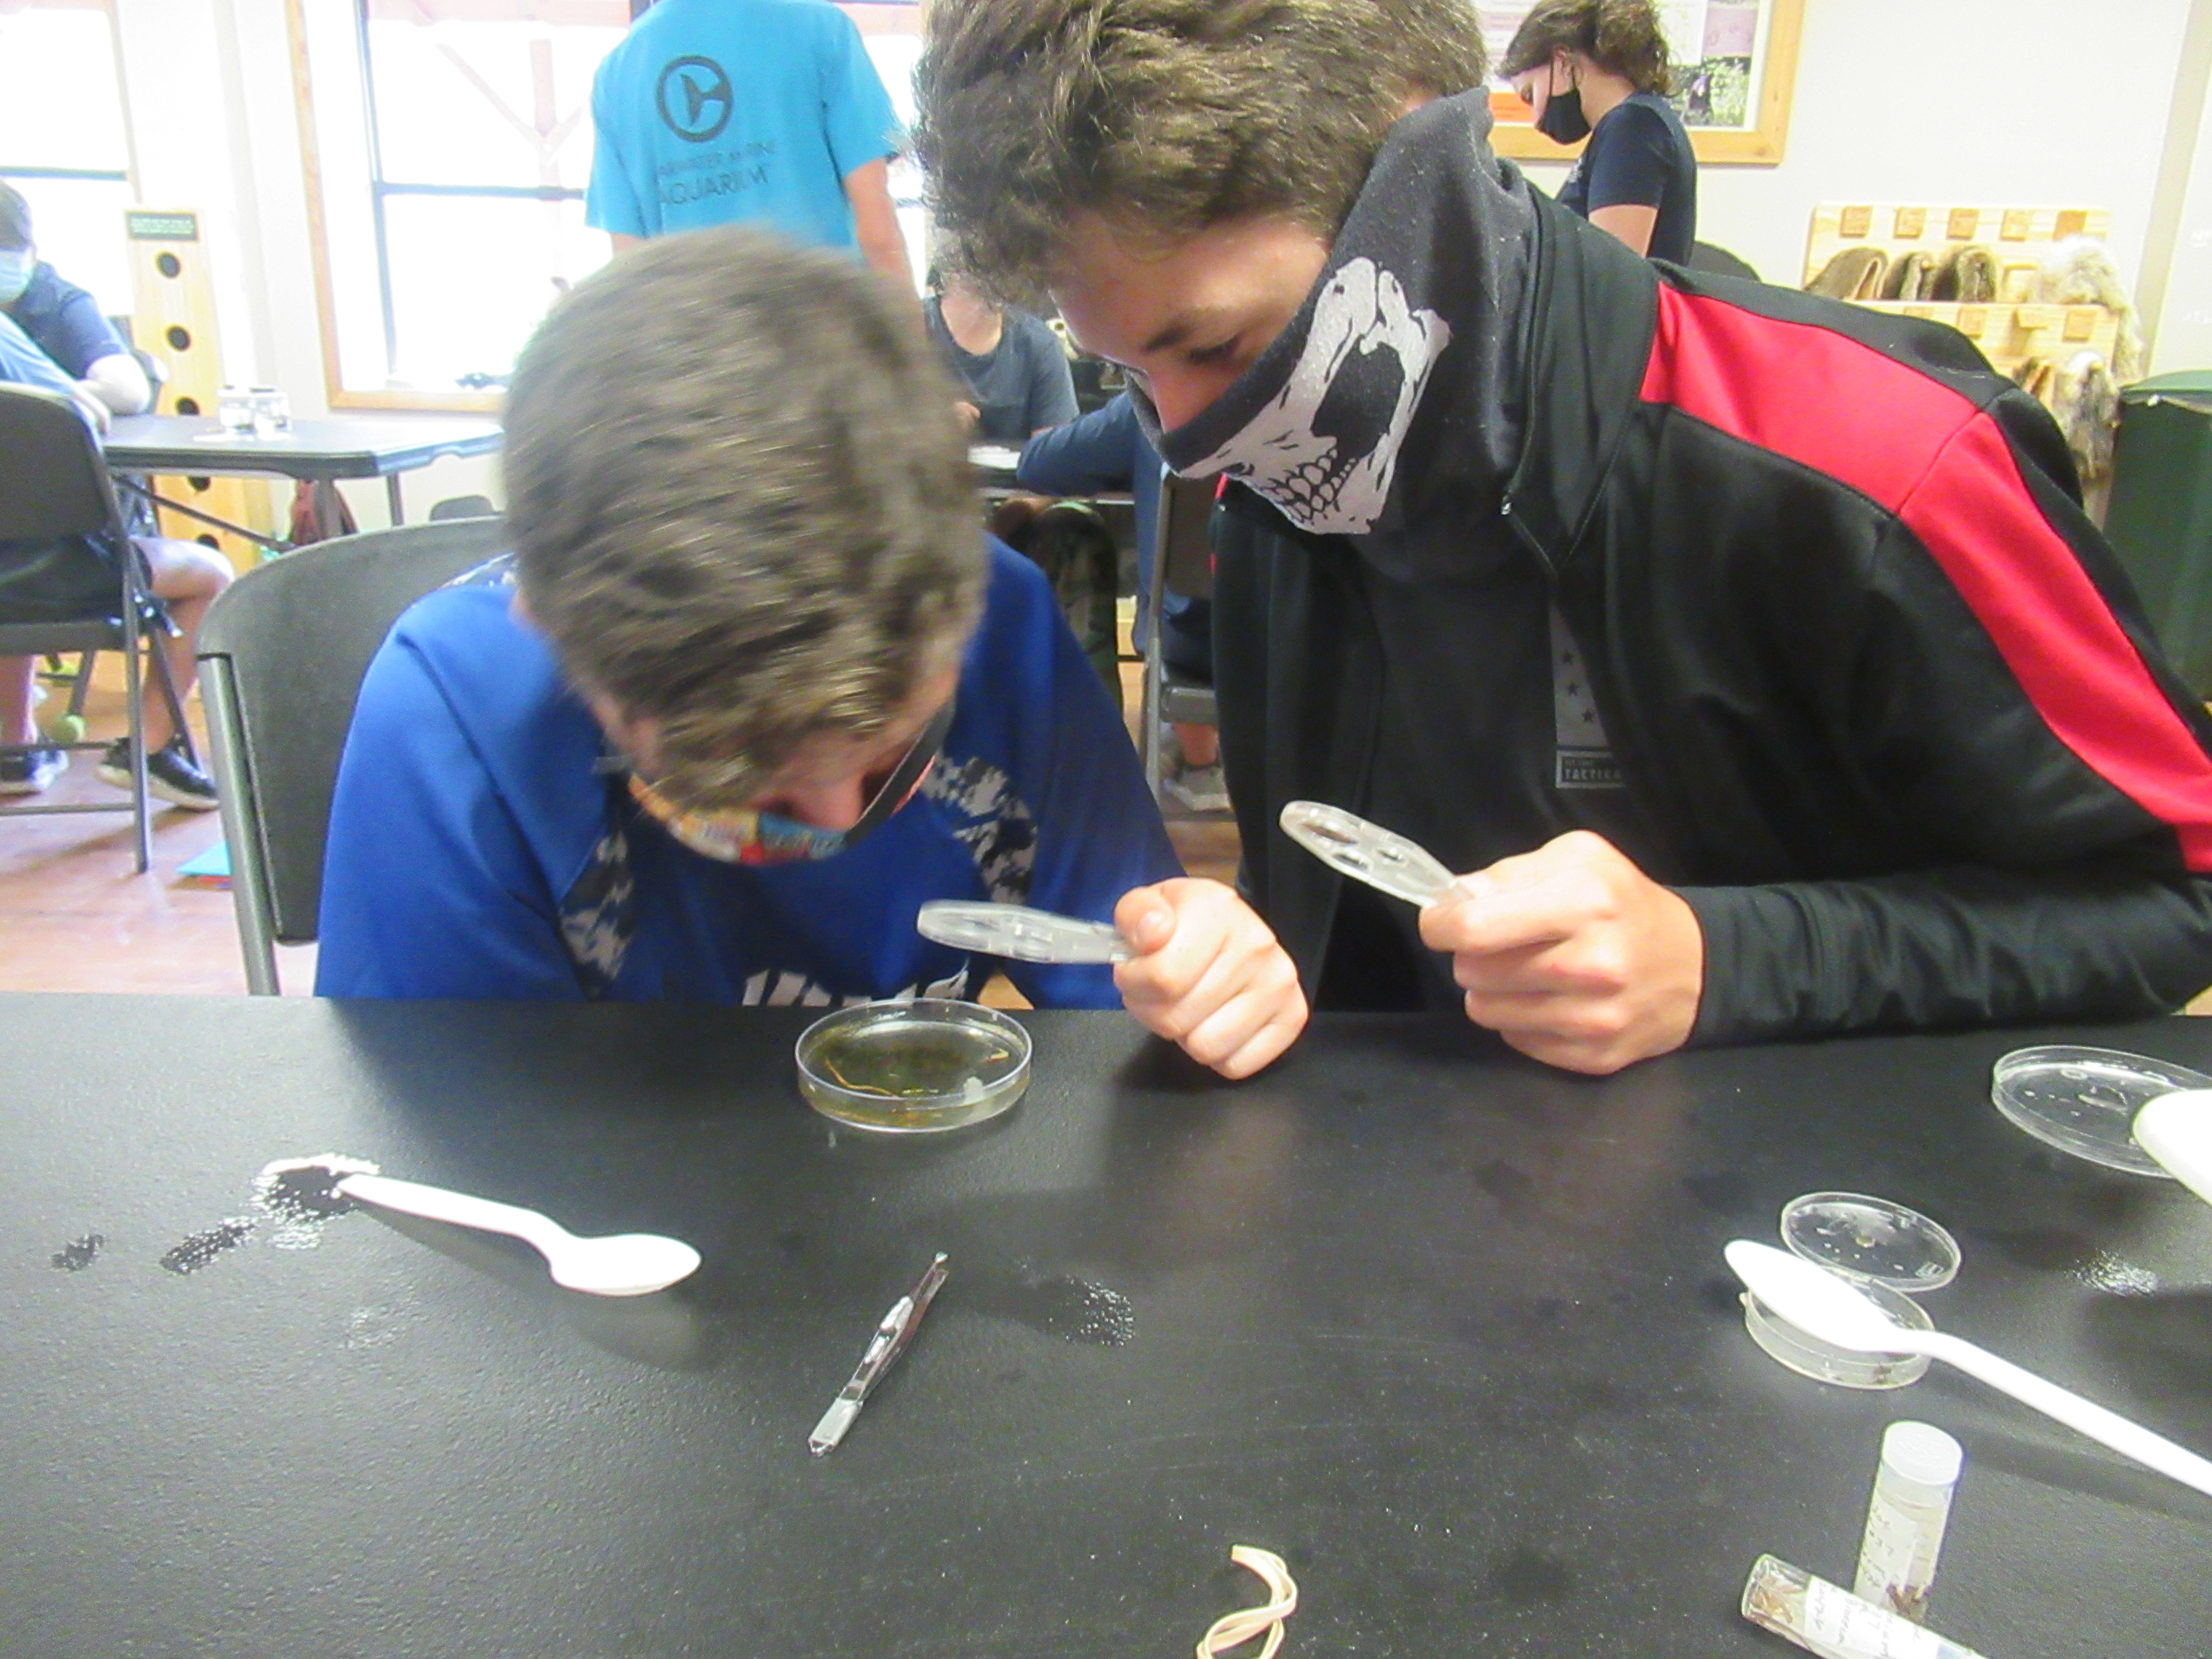 teens looking at macroinvertebrates in a petri dish